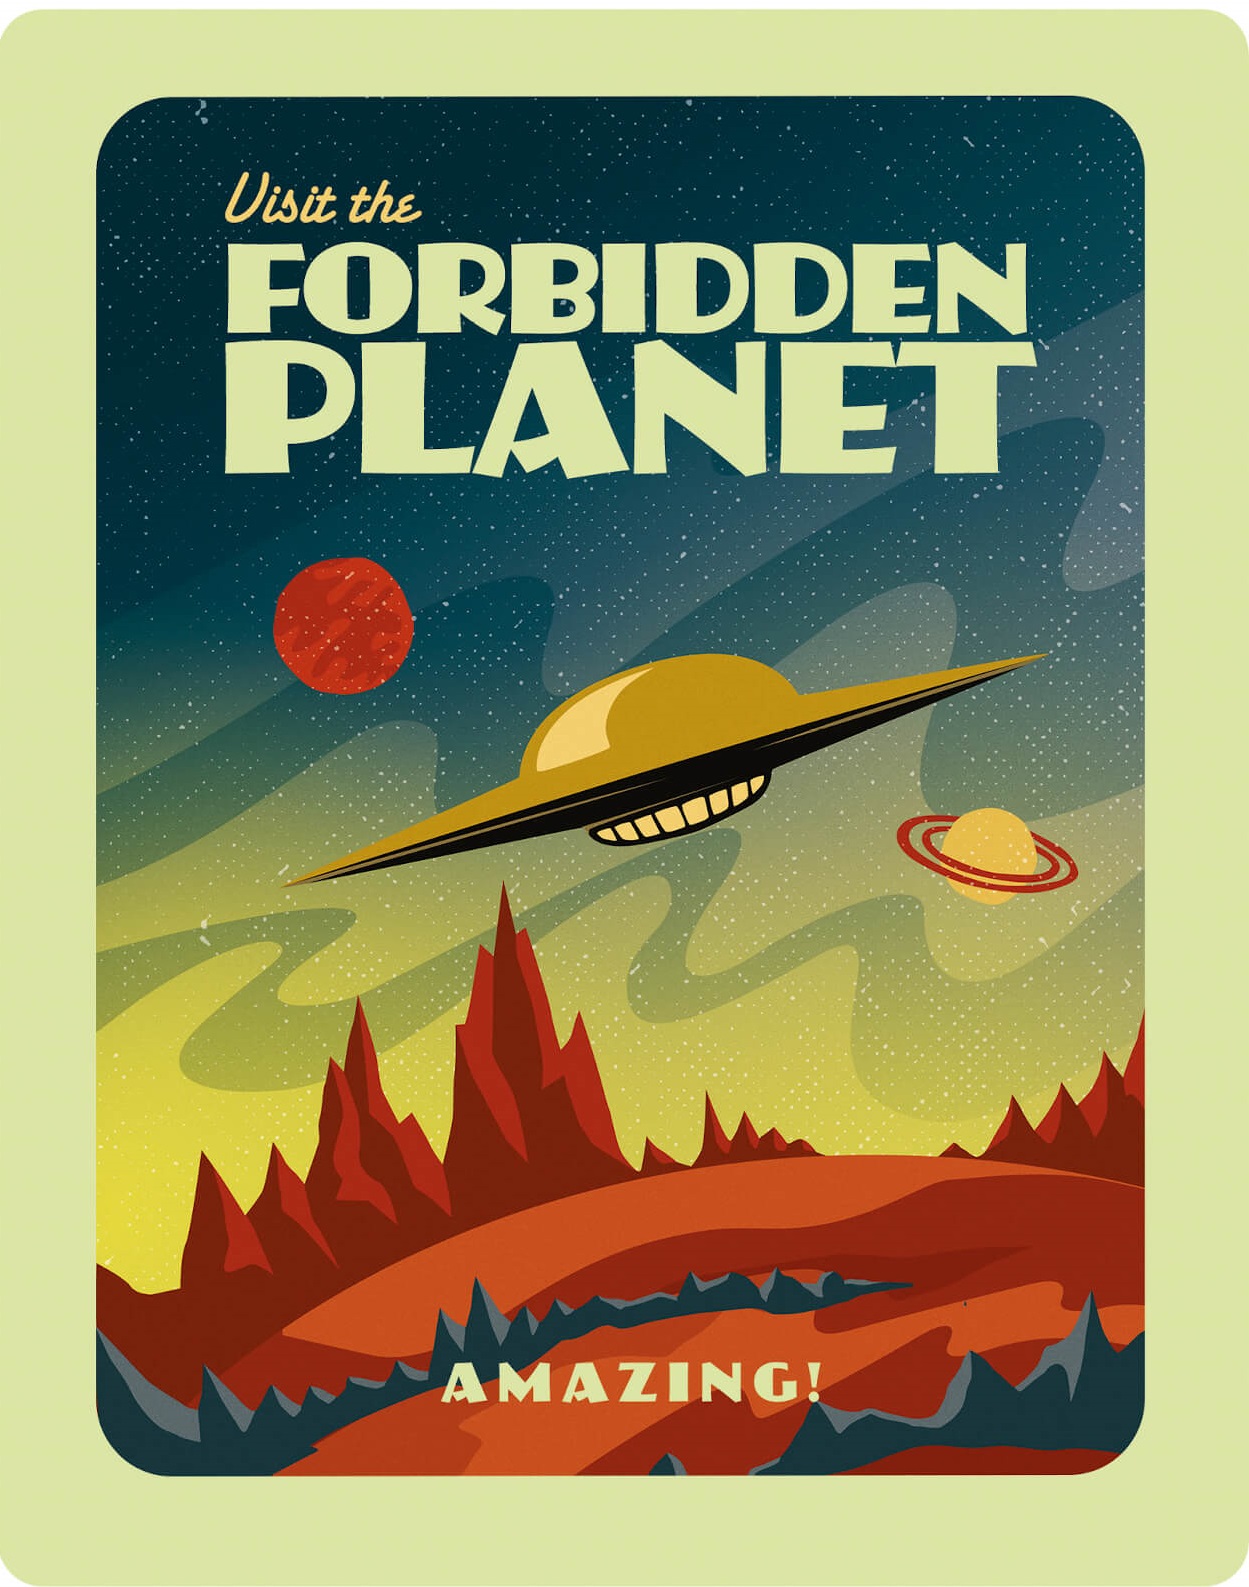 Forbidden Planet  Music Box Theatre